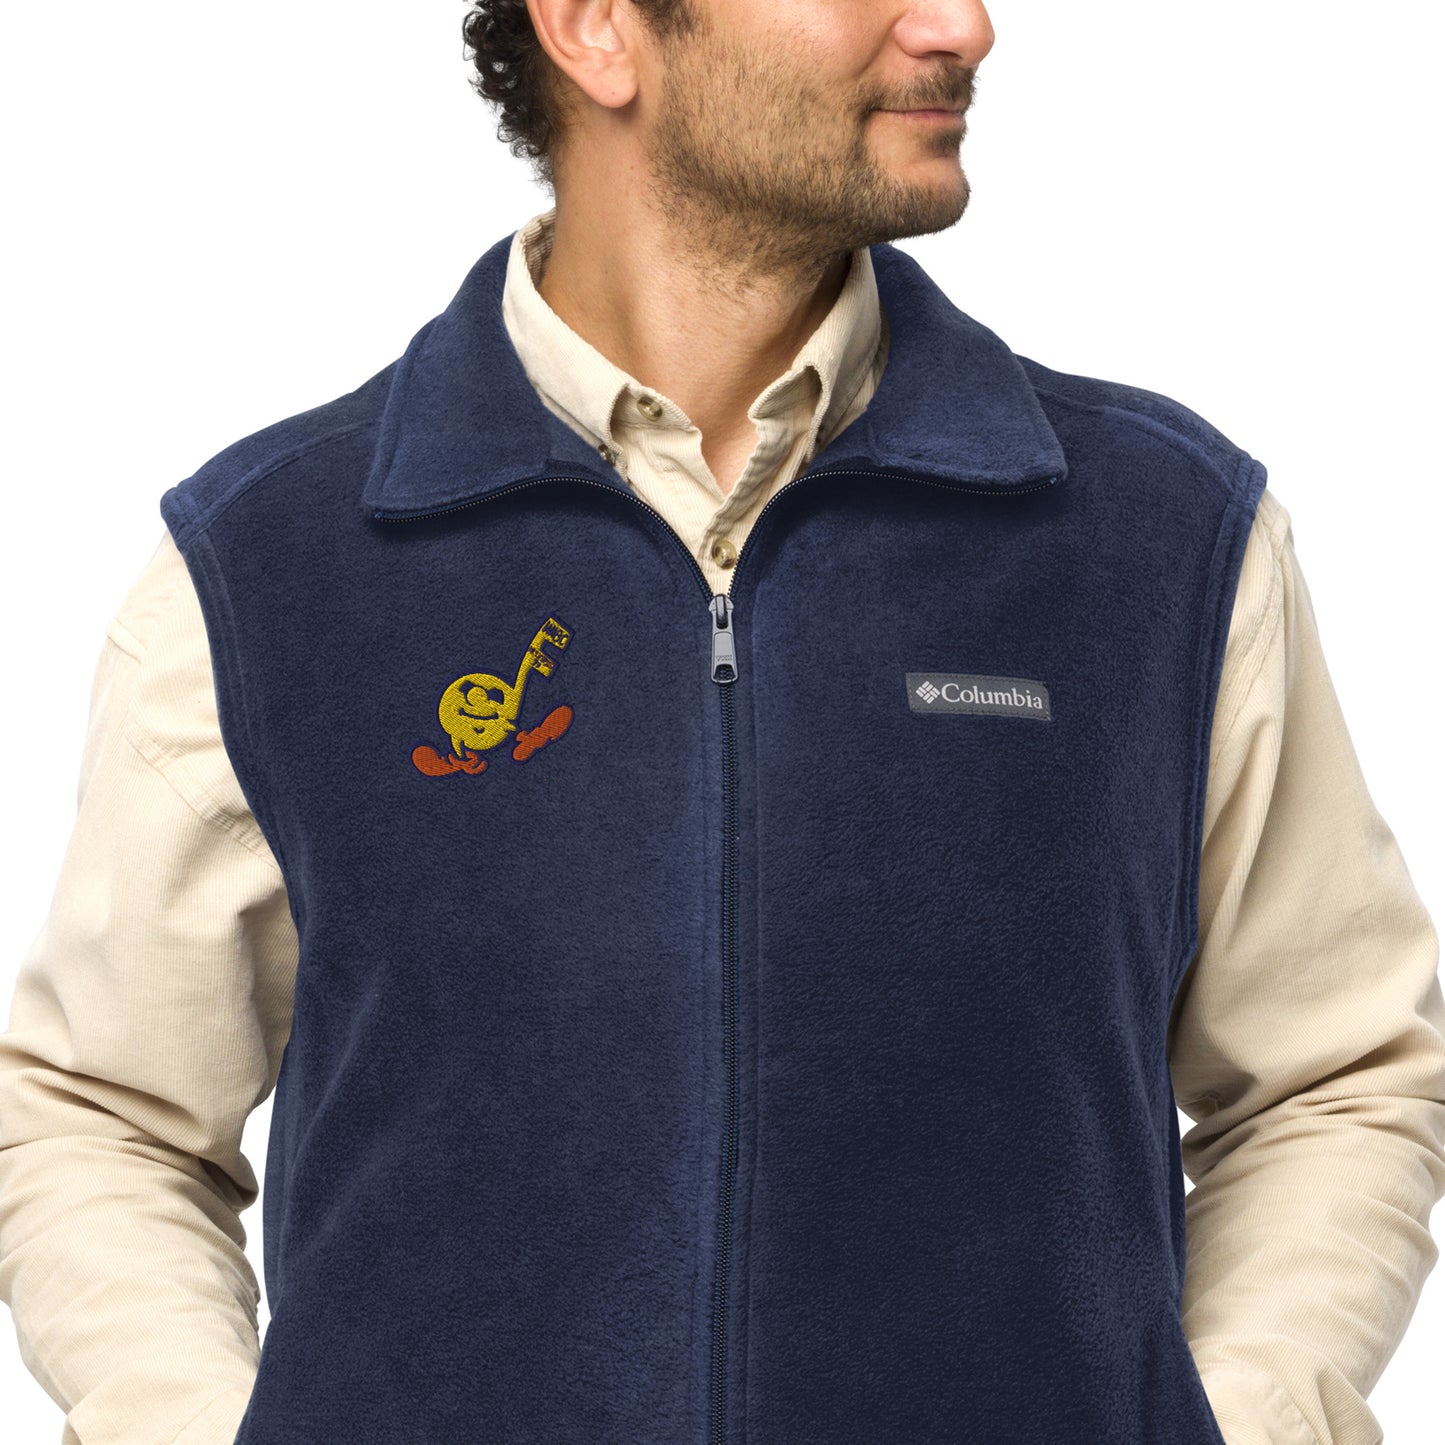 Embroidered Unisex WABC Music Radio Columbia fleece vest